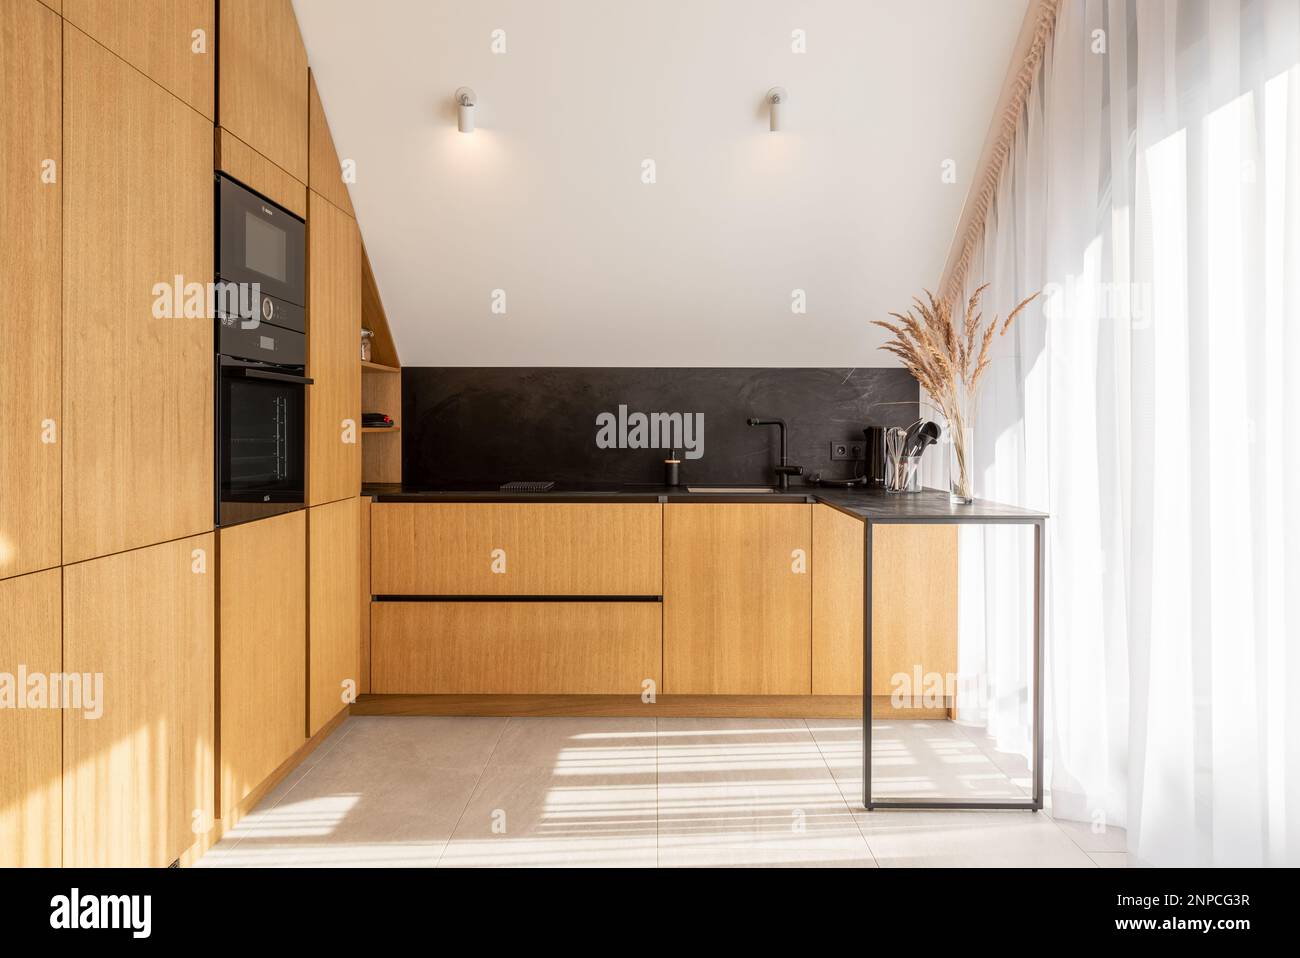 Bright Modern Kitchen in New Luxury Home, Hardwood Floors, Dark Wood Cabinets. Stock Photo